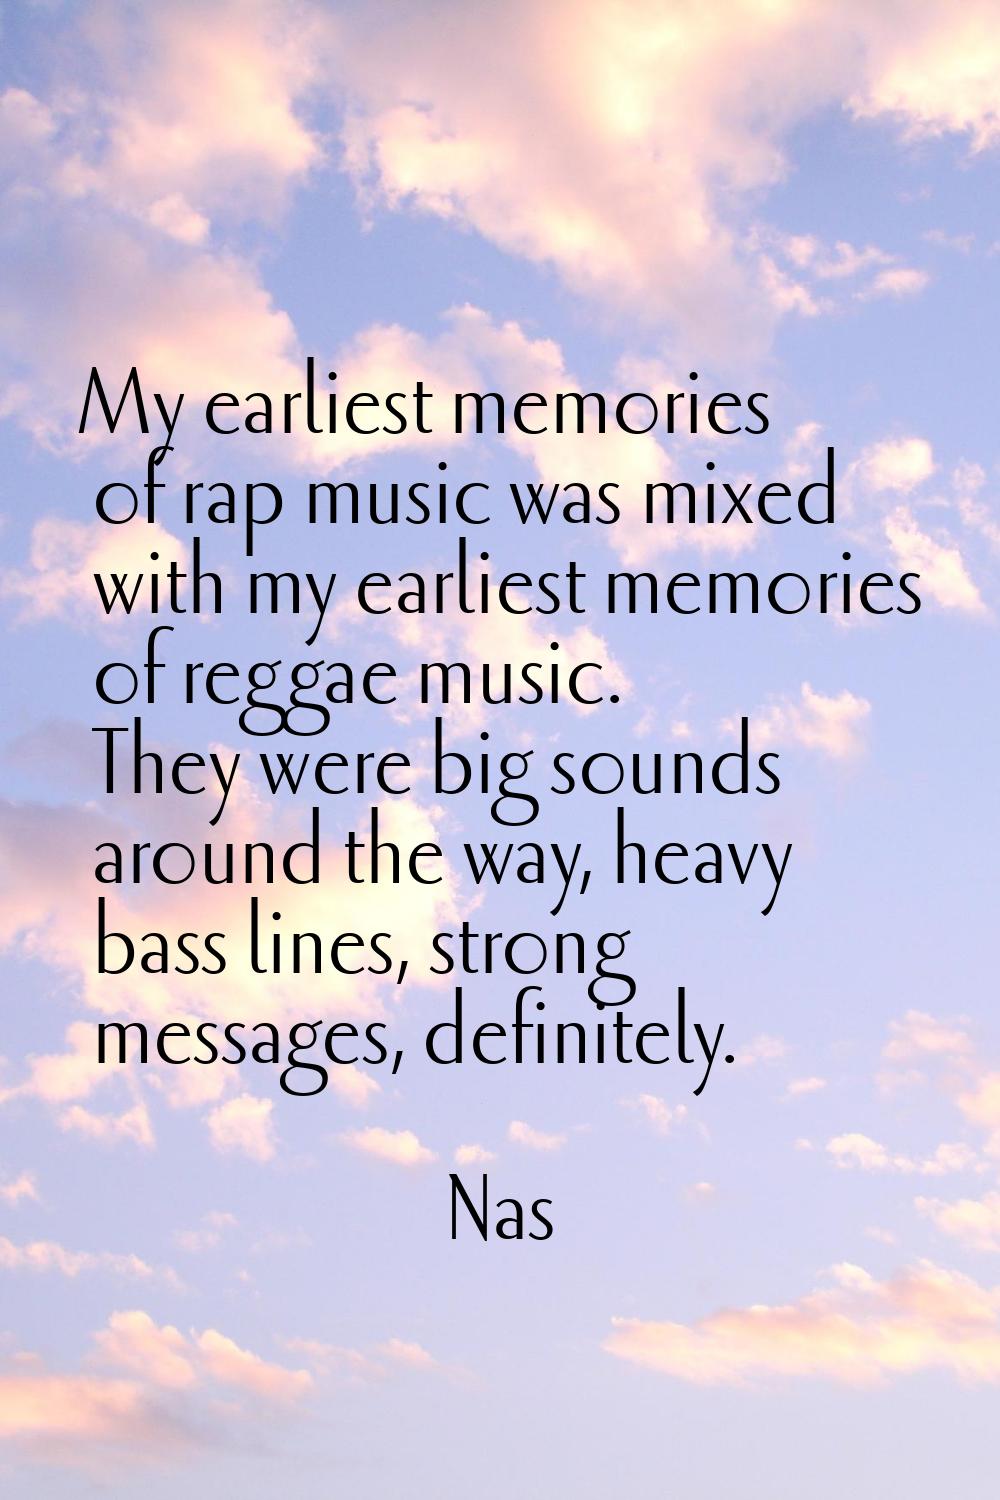 My earliest memories of rap music was mixed with my earliest memories of reggae music. They were bi